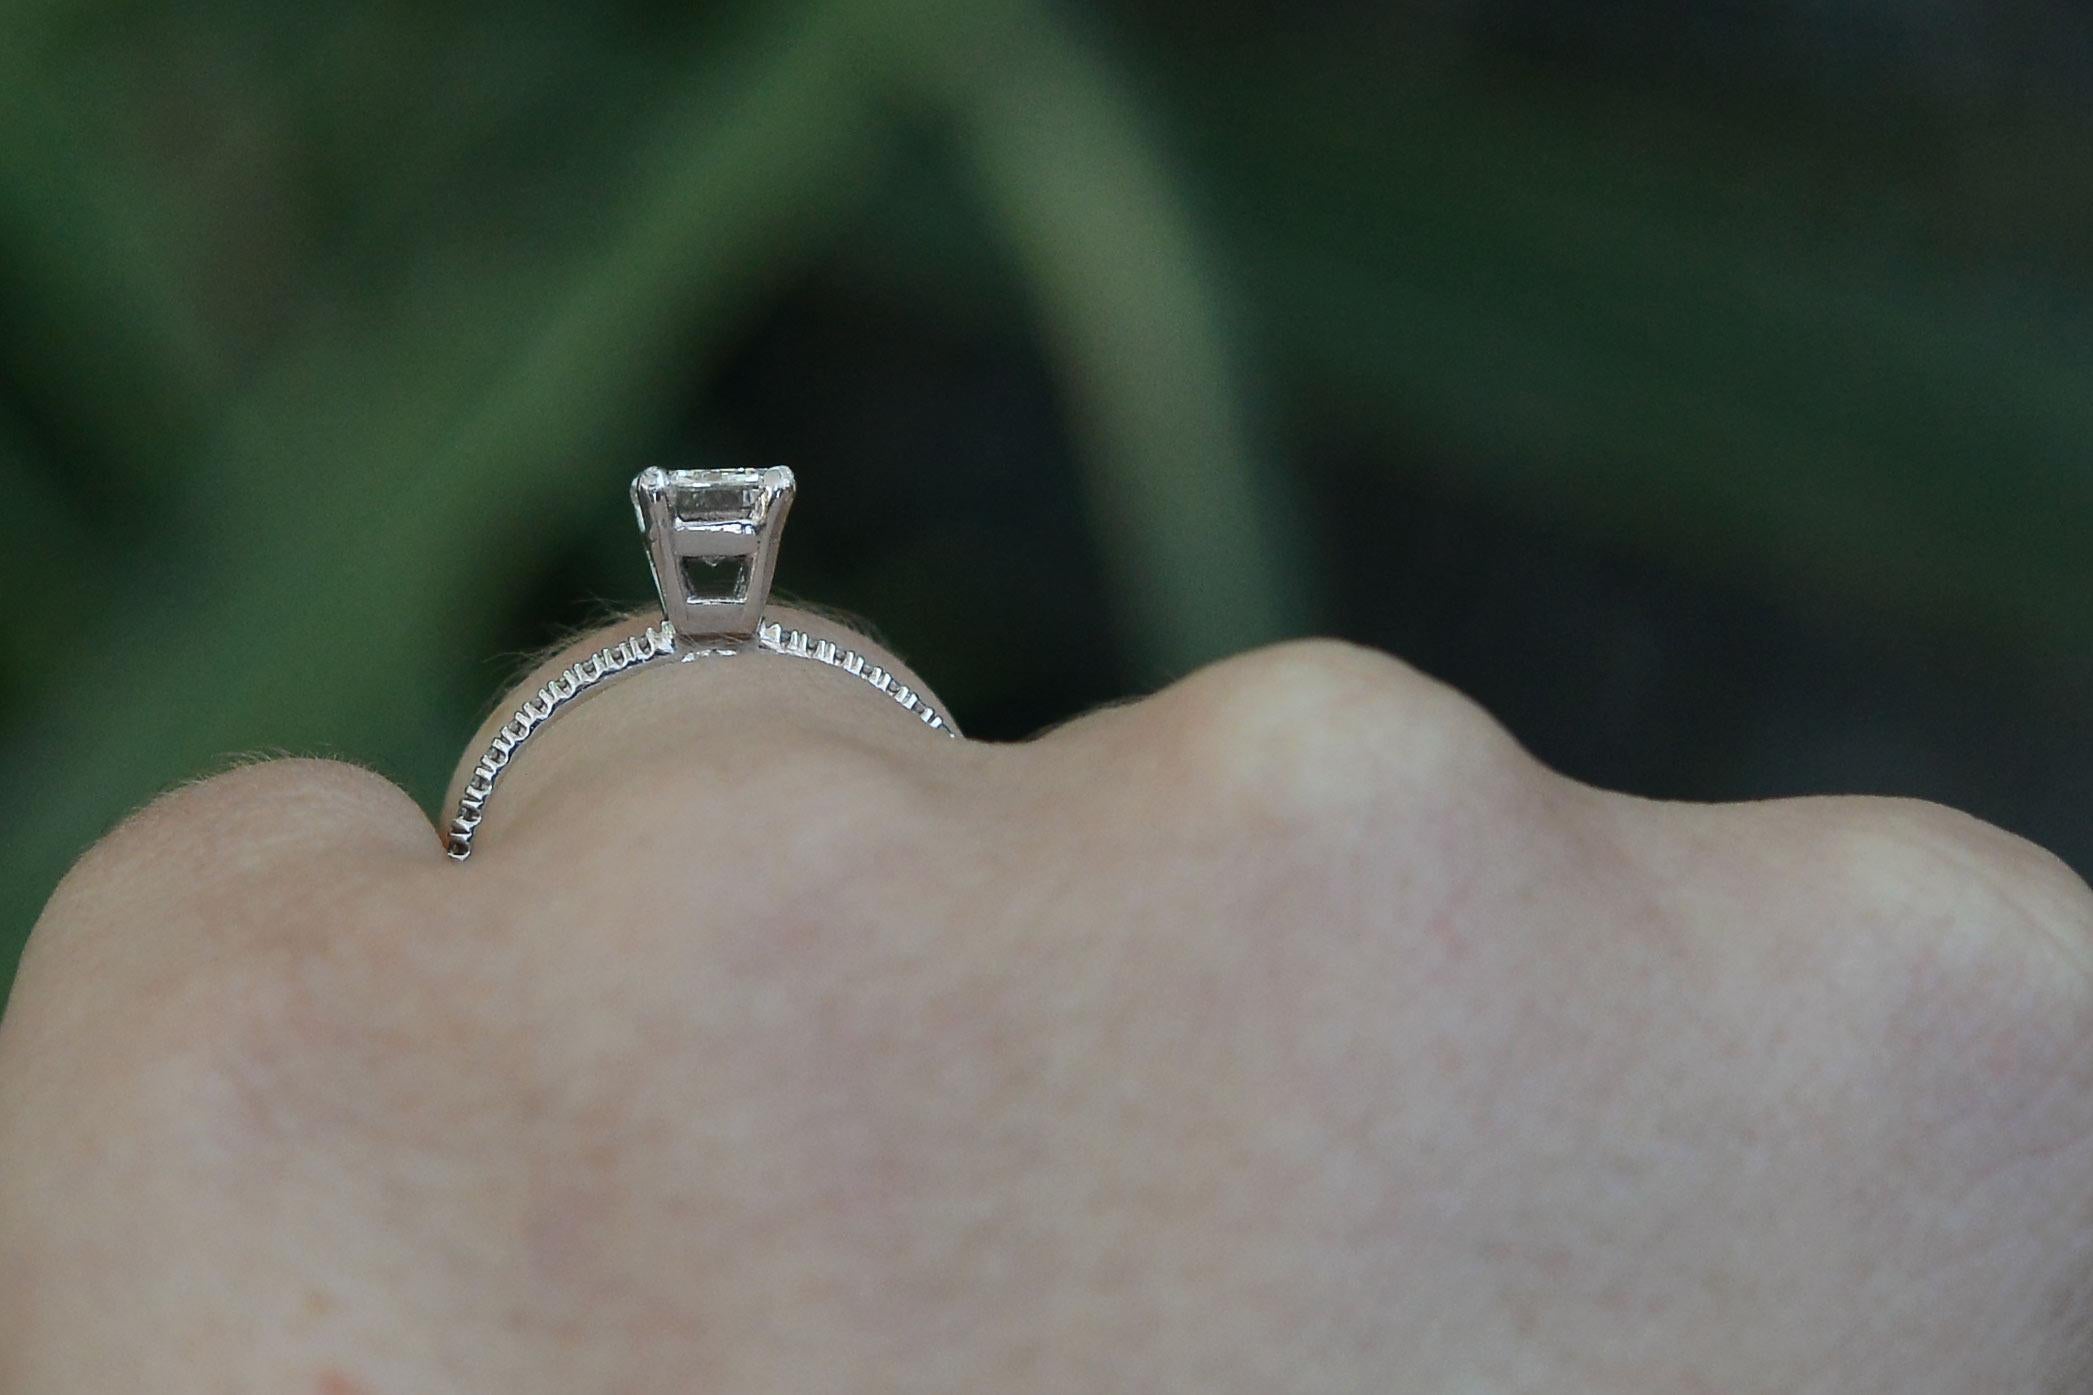 1.2 carat emerald cut diamond ring